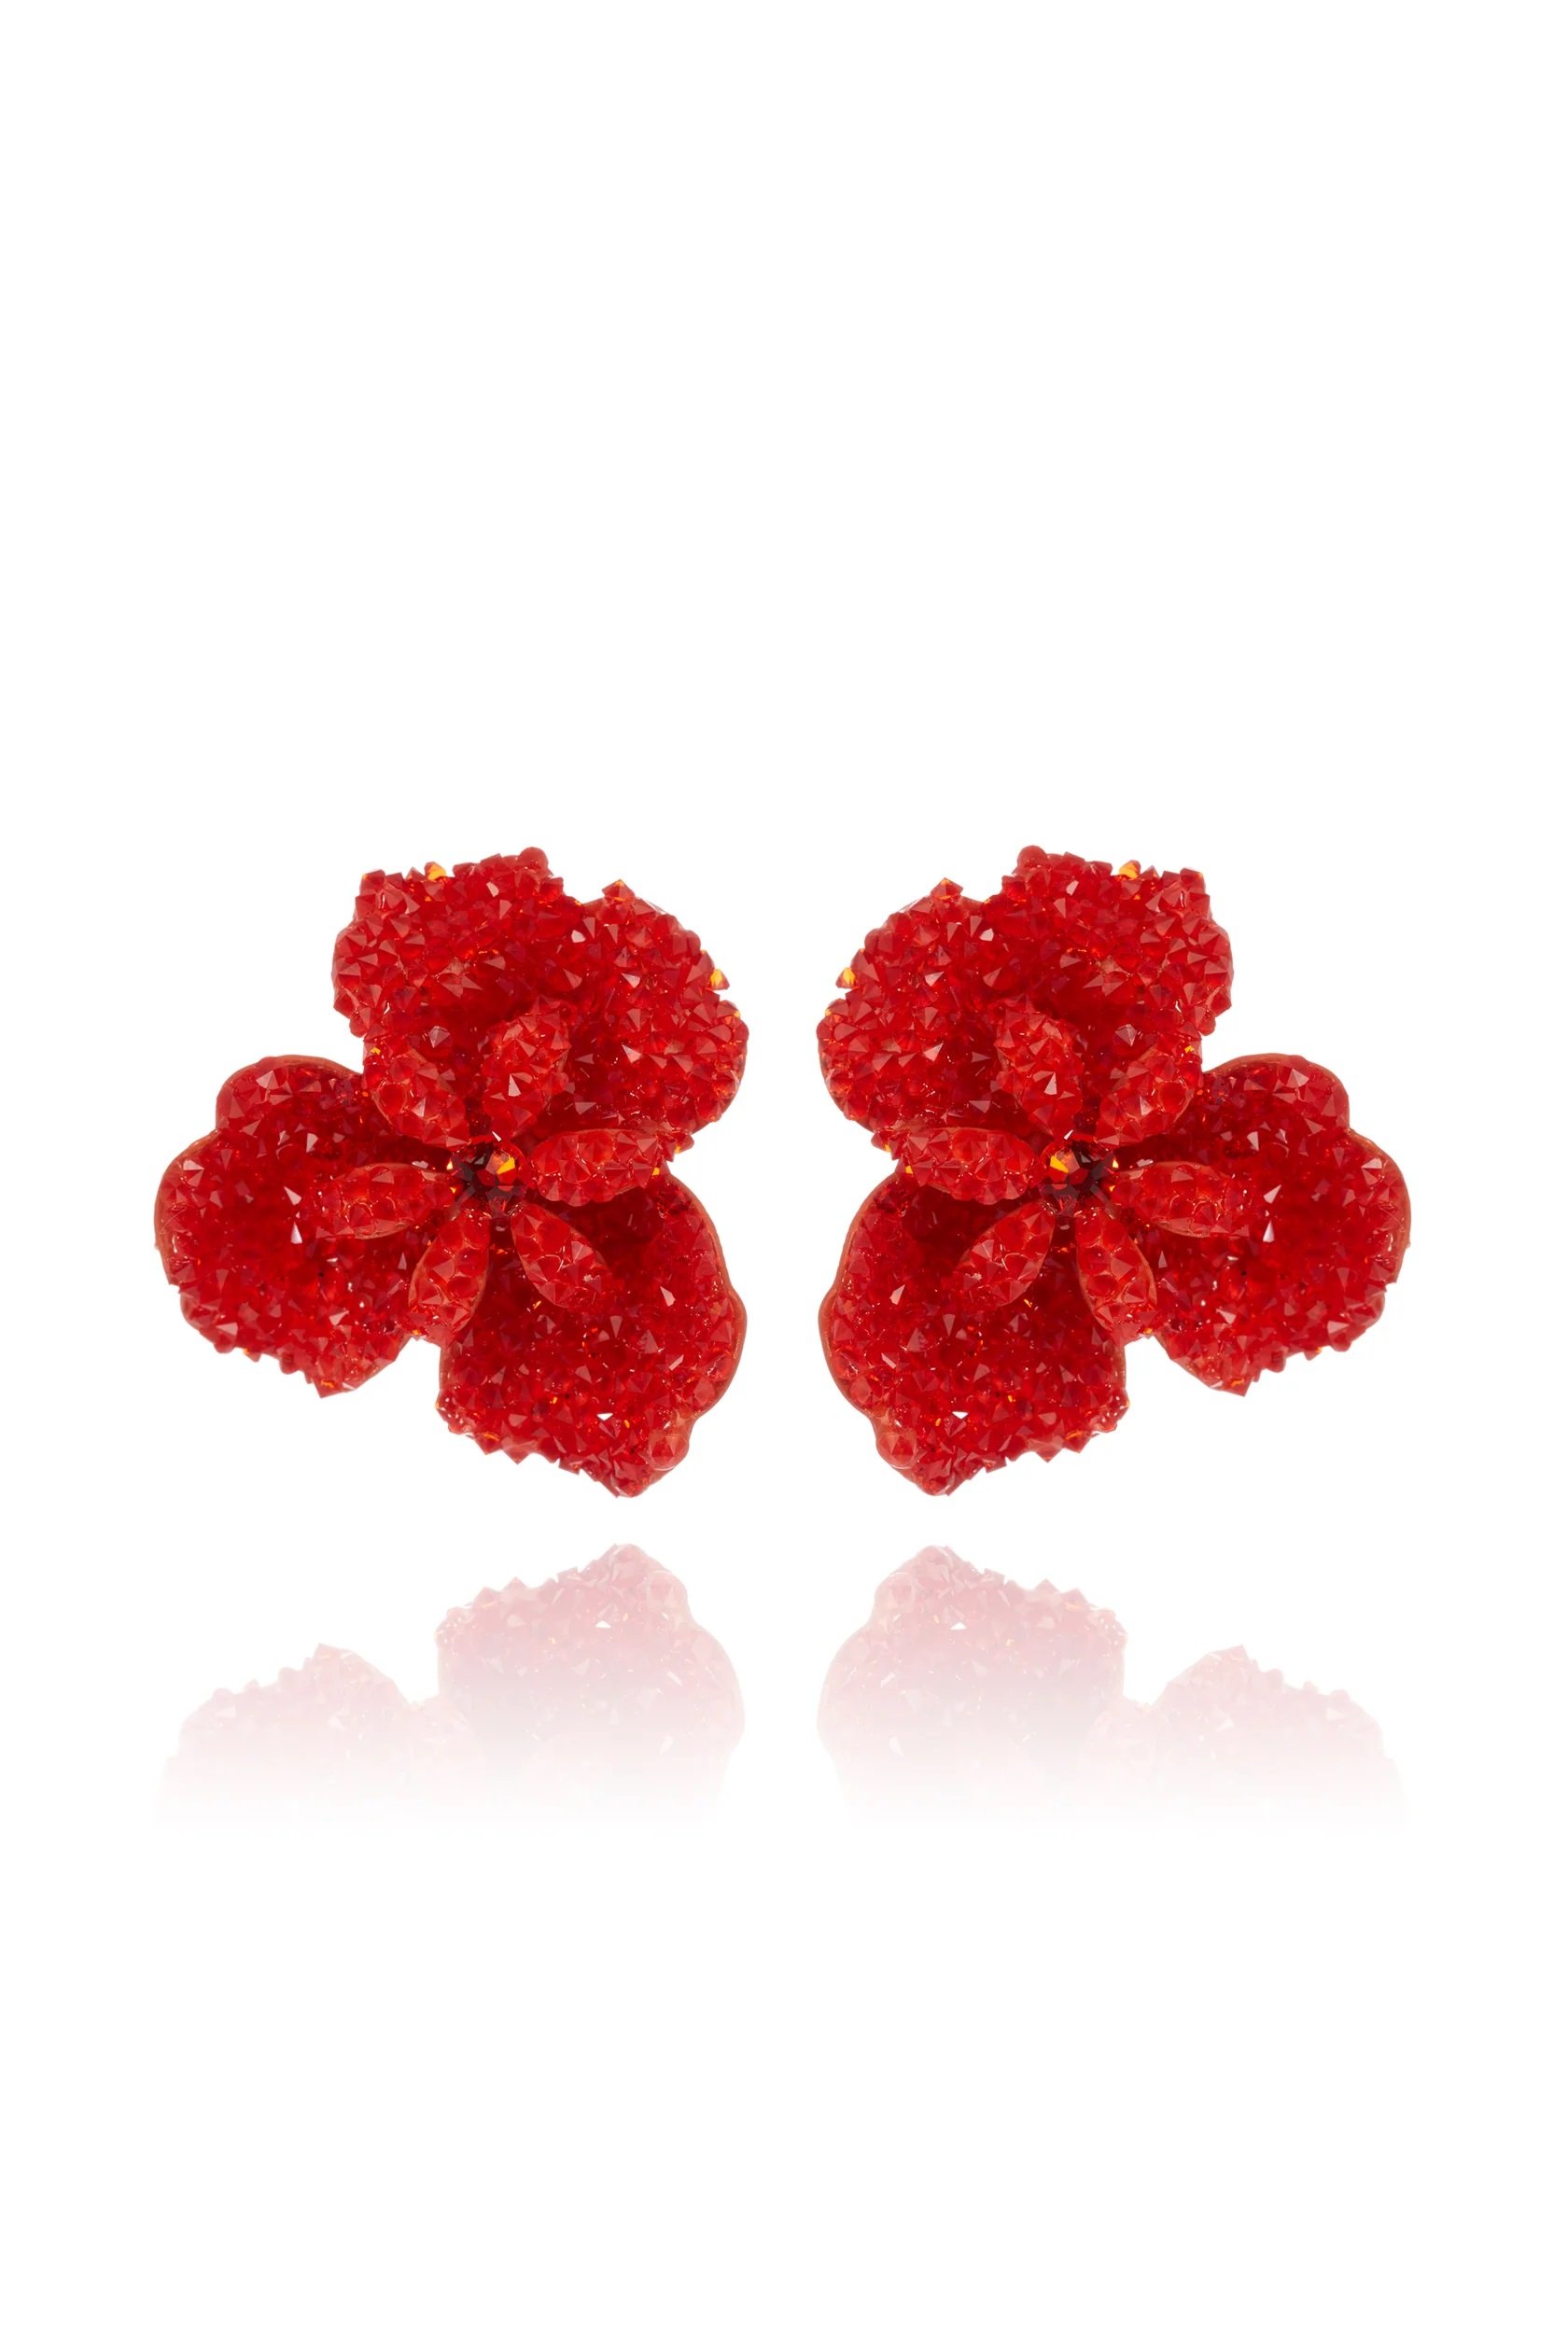 Laurence Coste Colette Earrings in Red.jpg